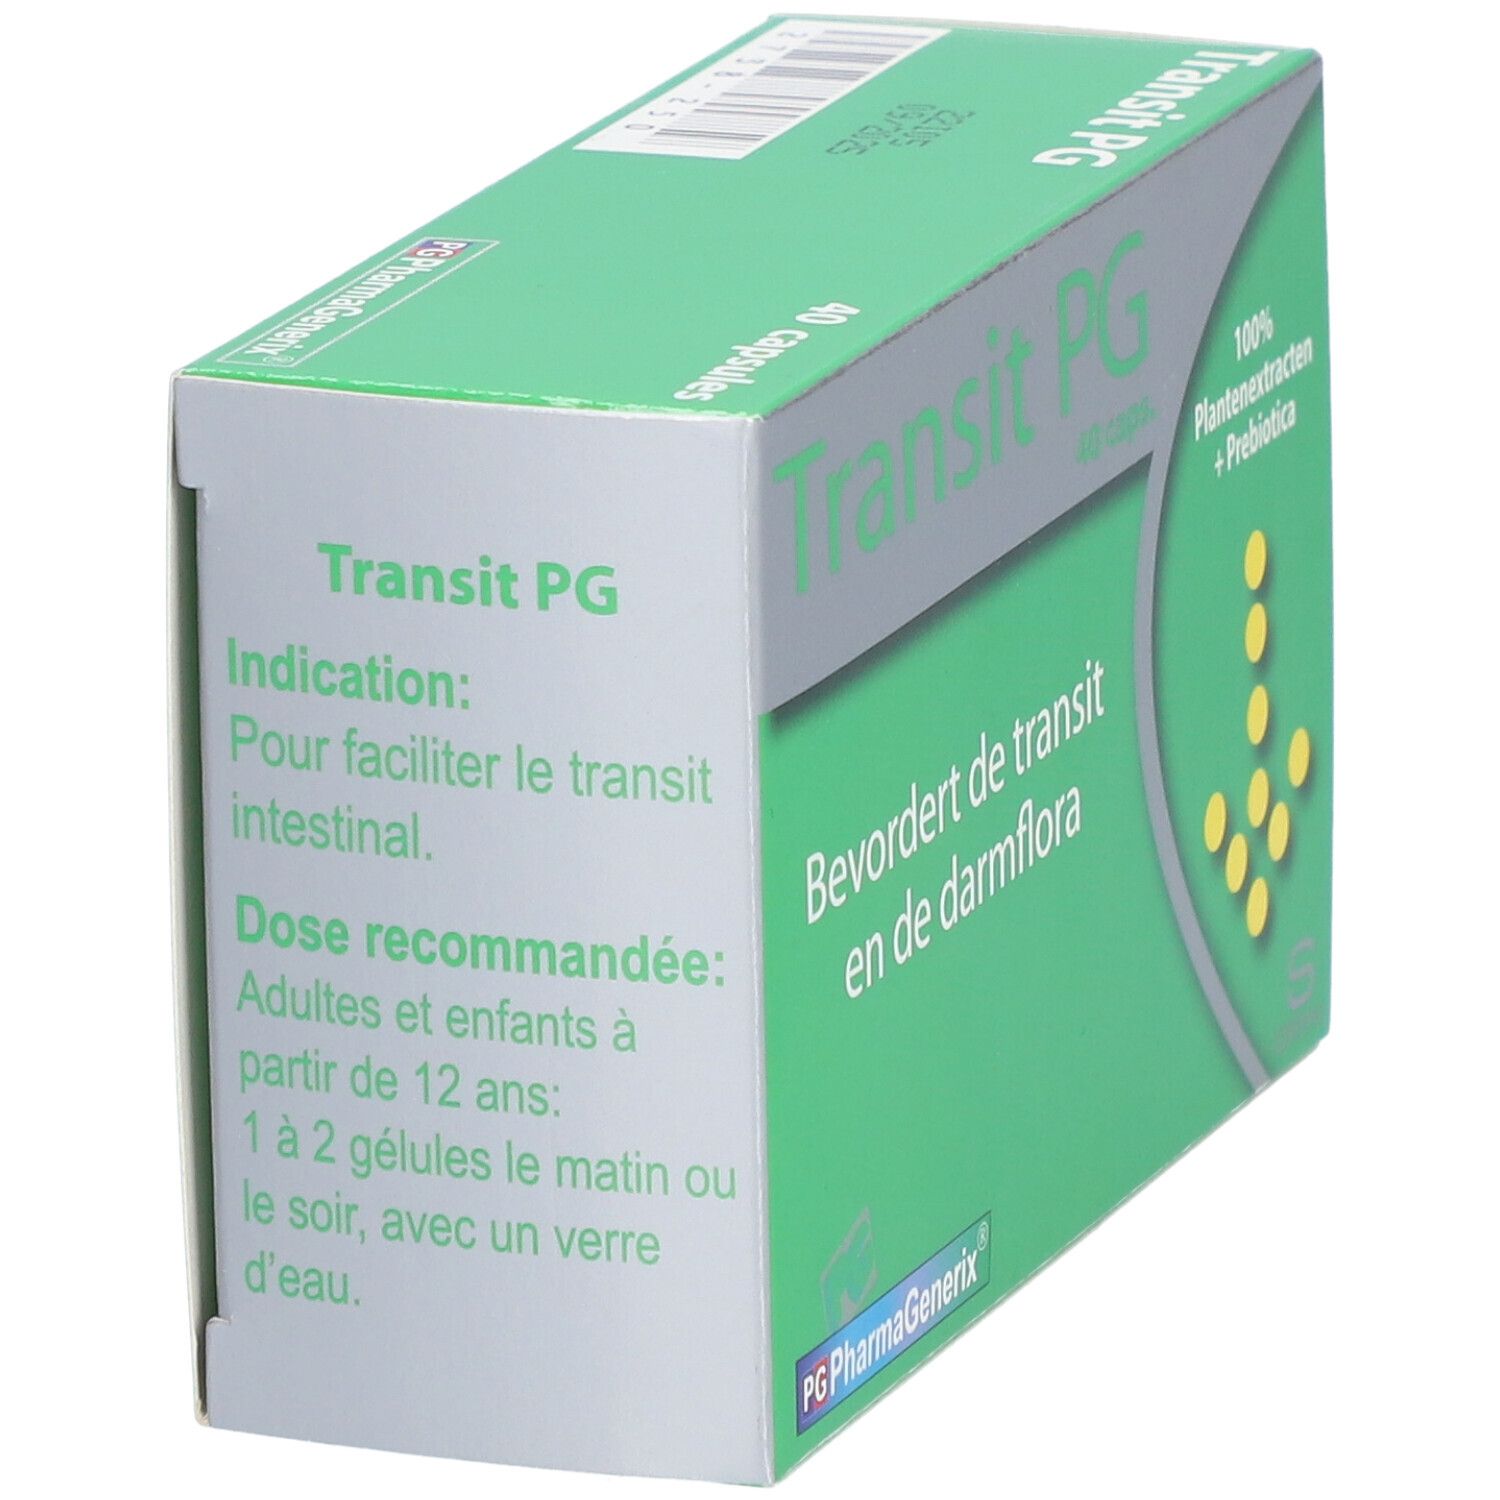 Pharmagenerix Transit